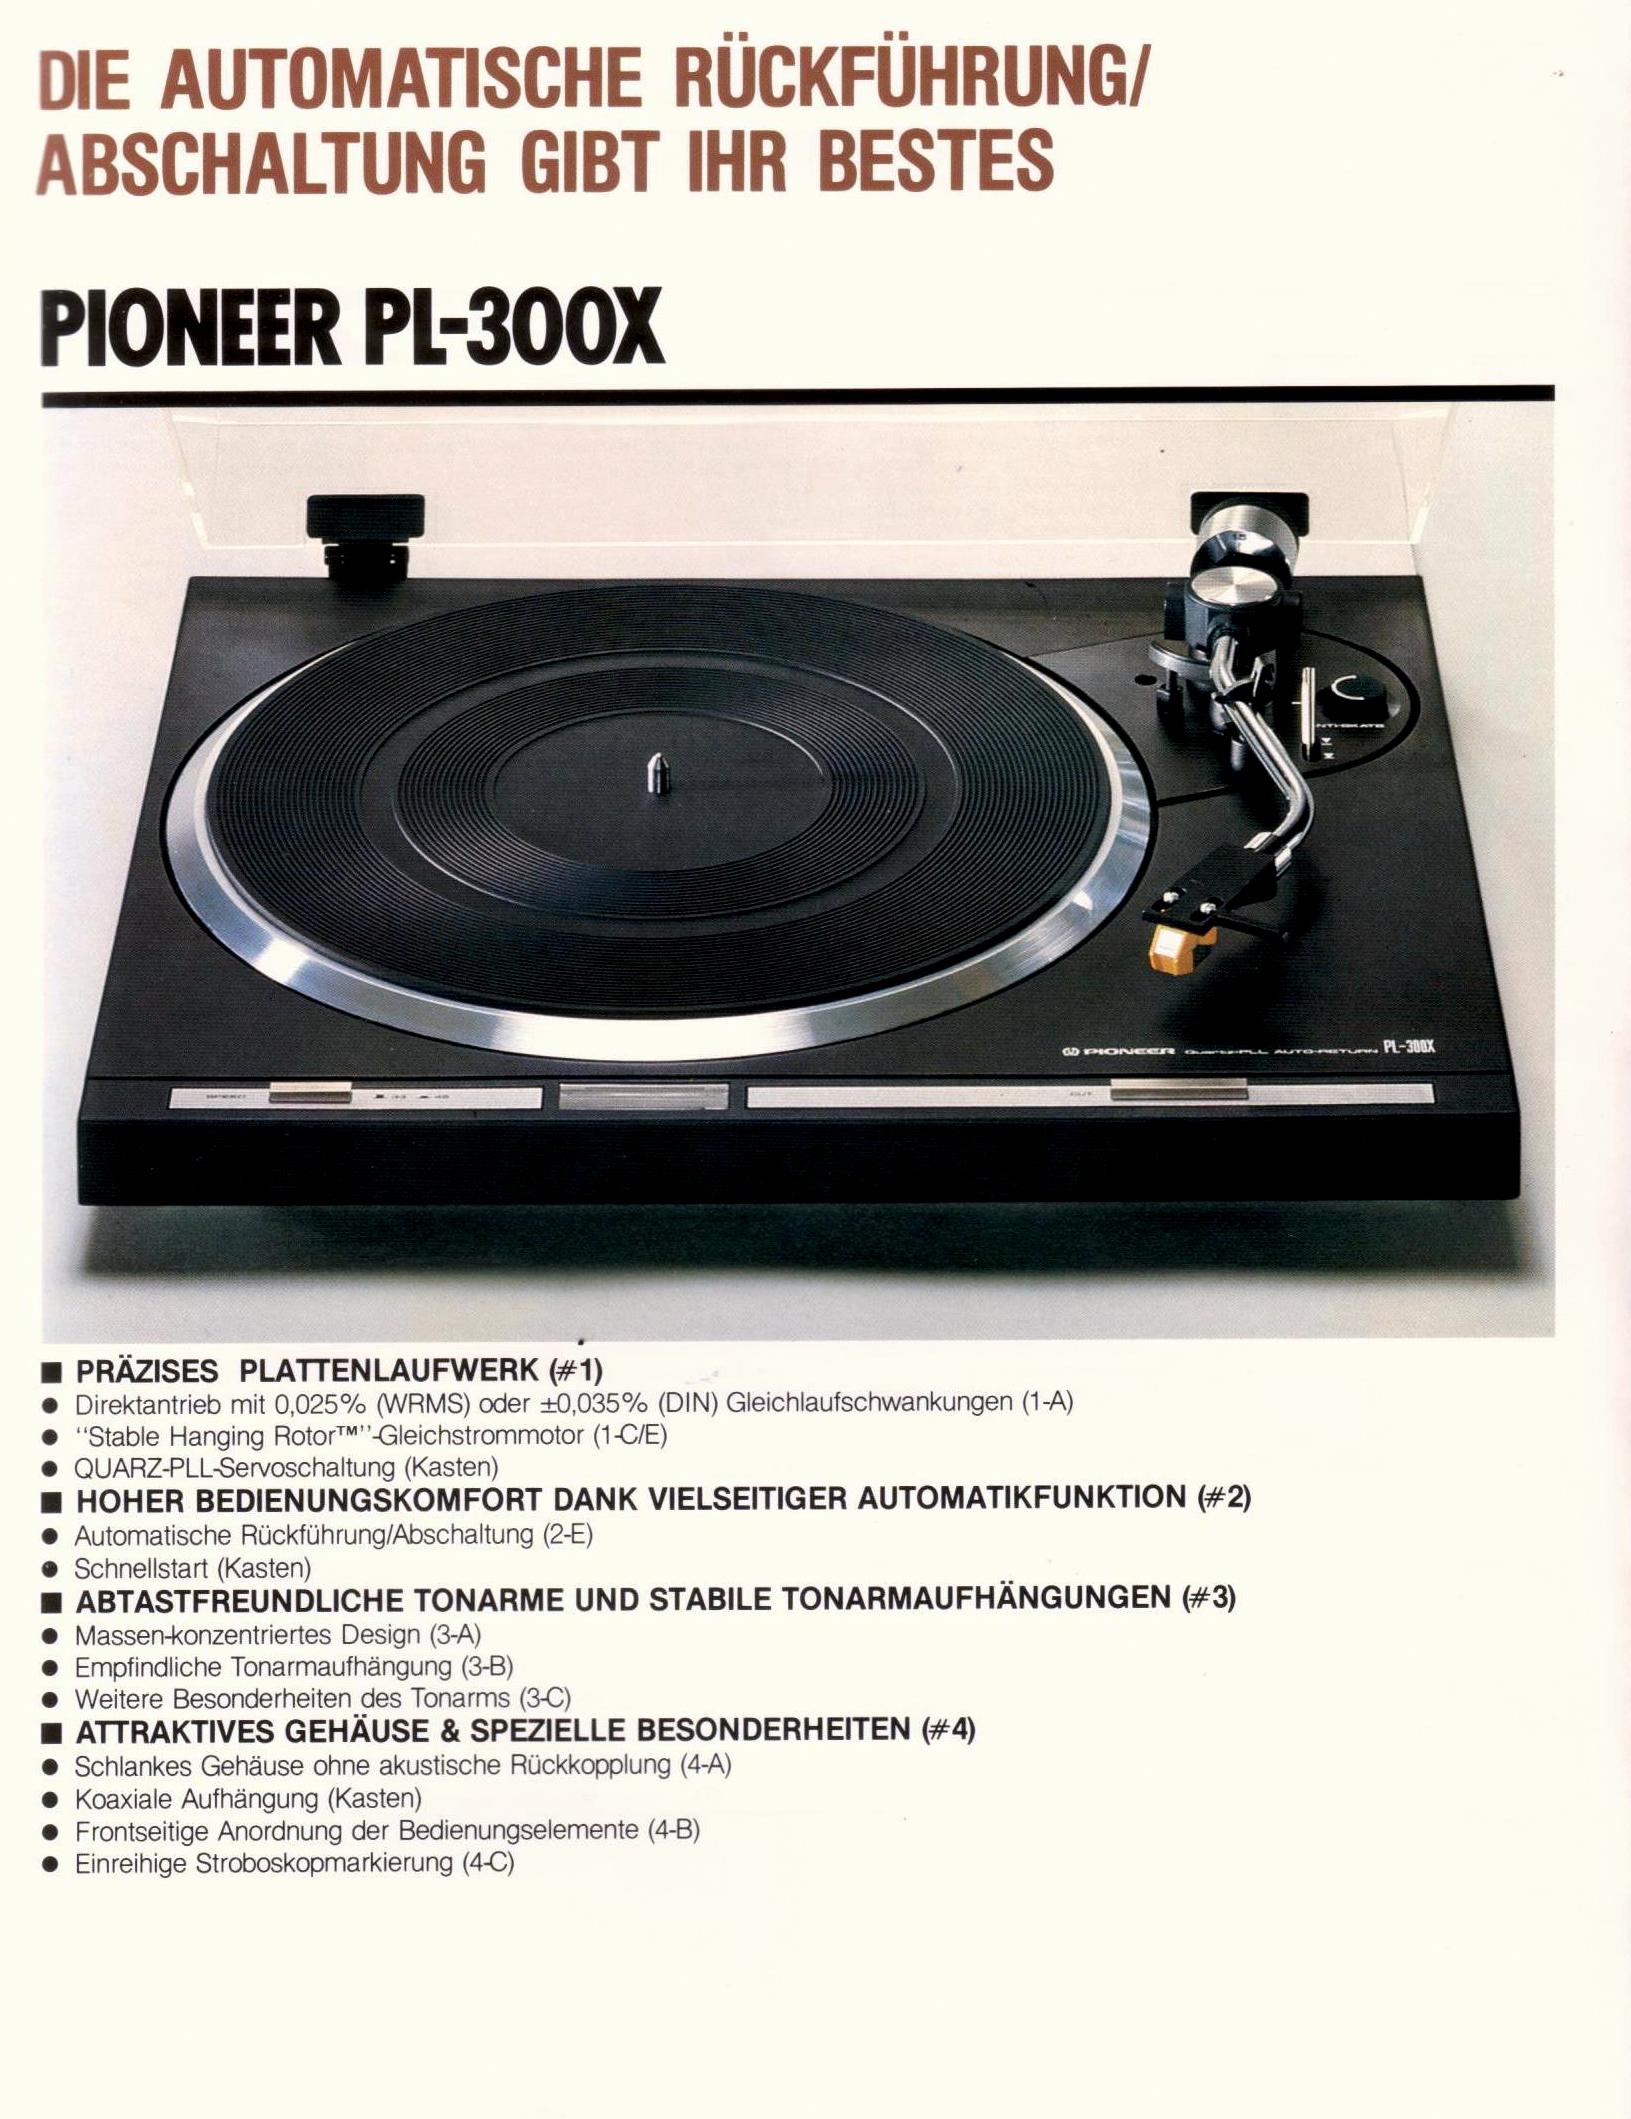 Pioneer PL-300 X-Prospekt-19801.jpg